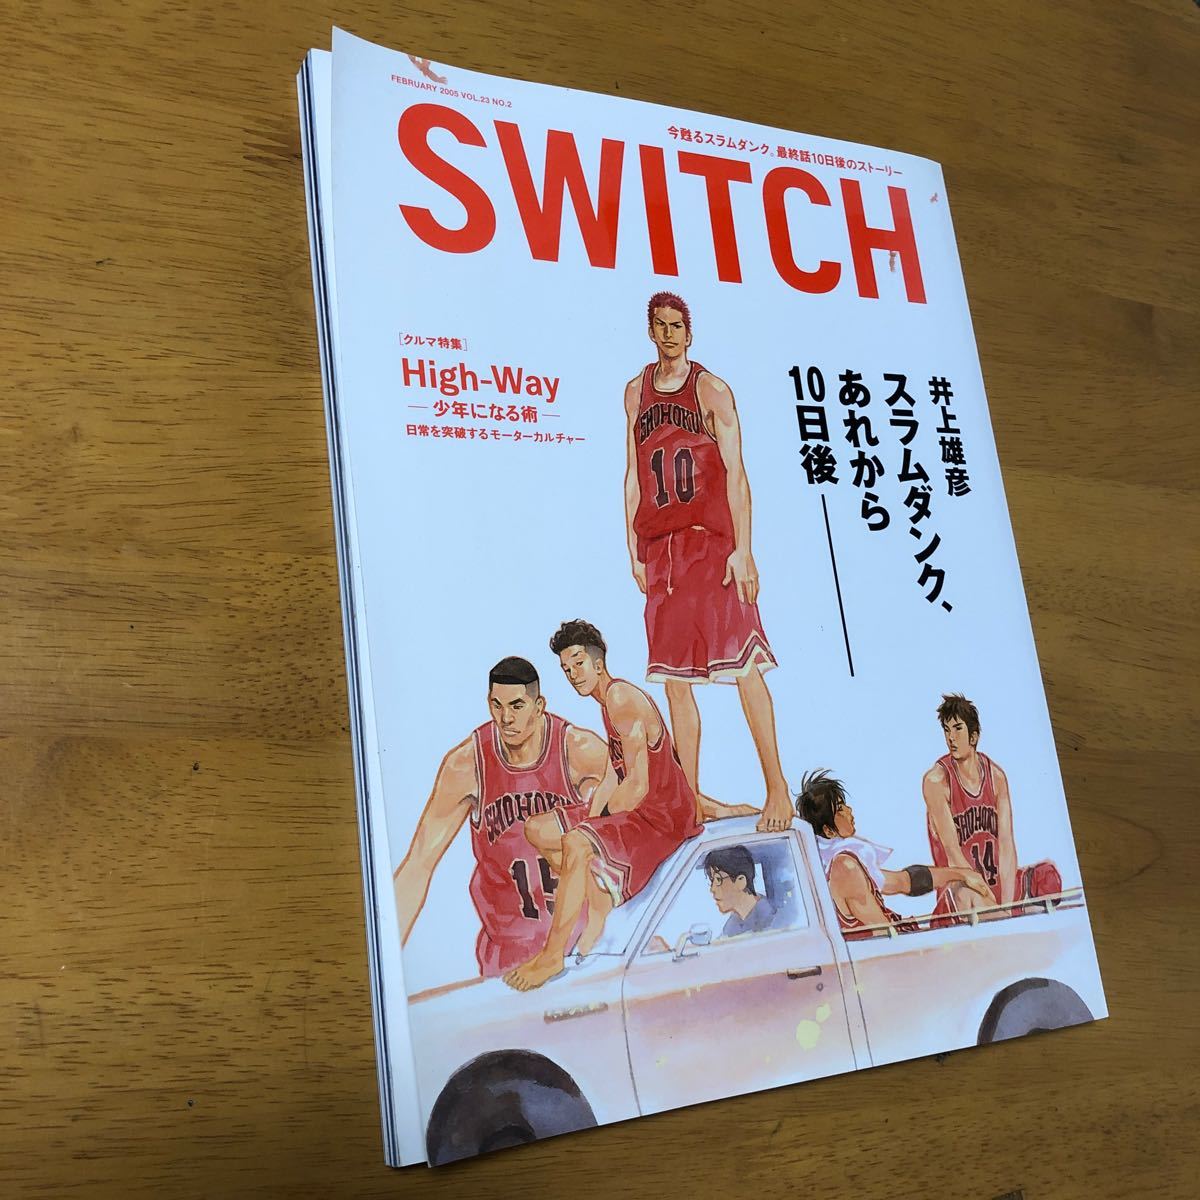 SWITCH Switch スラムダンク あれから10日後 井上雄彦 スウィッチ